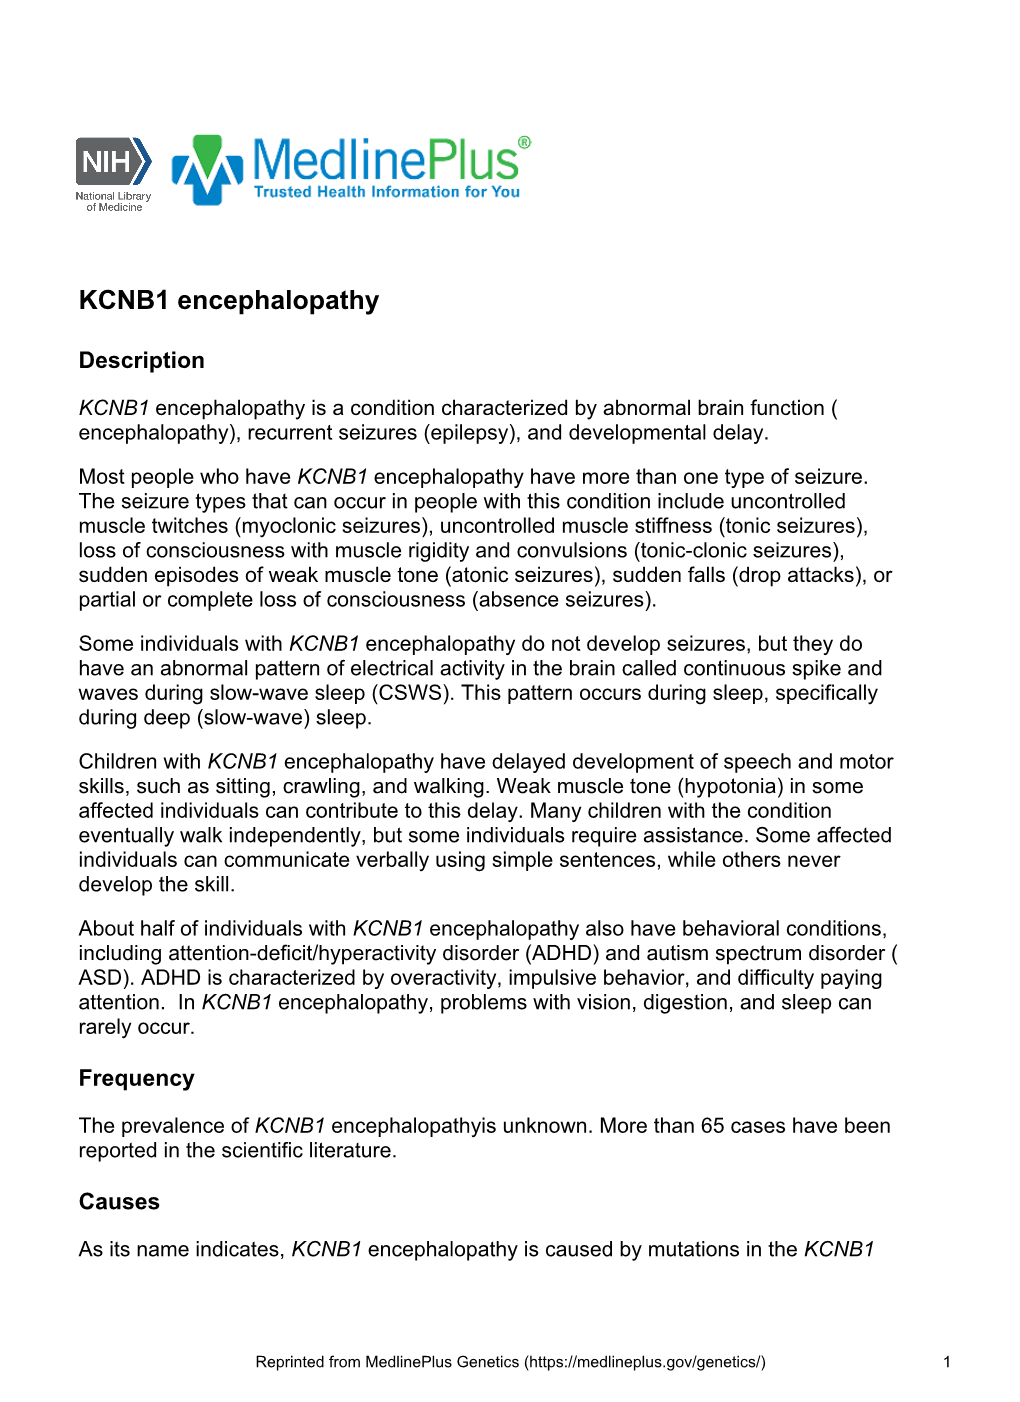 KCNB1 Encephalopathy